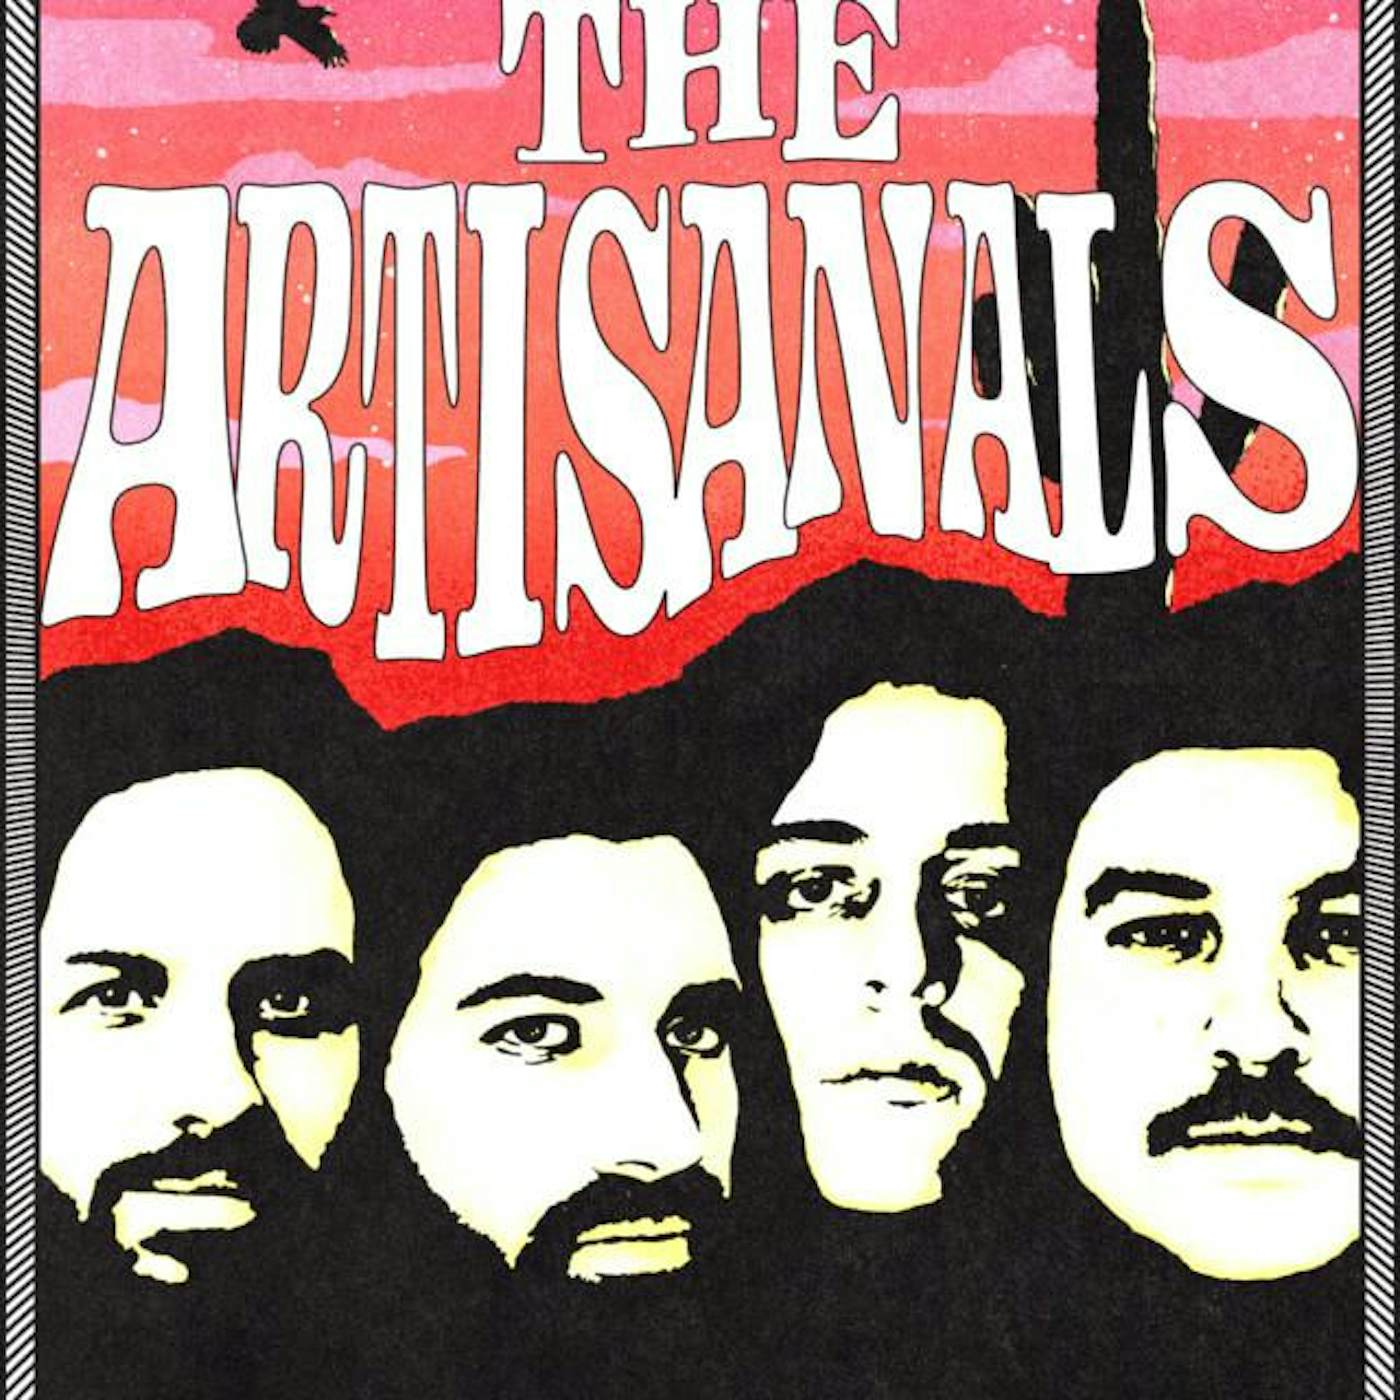 The Artisanals